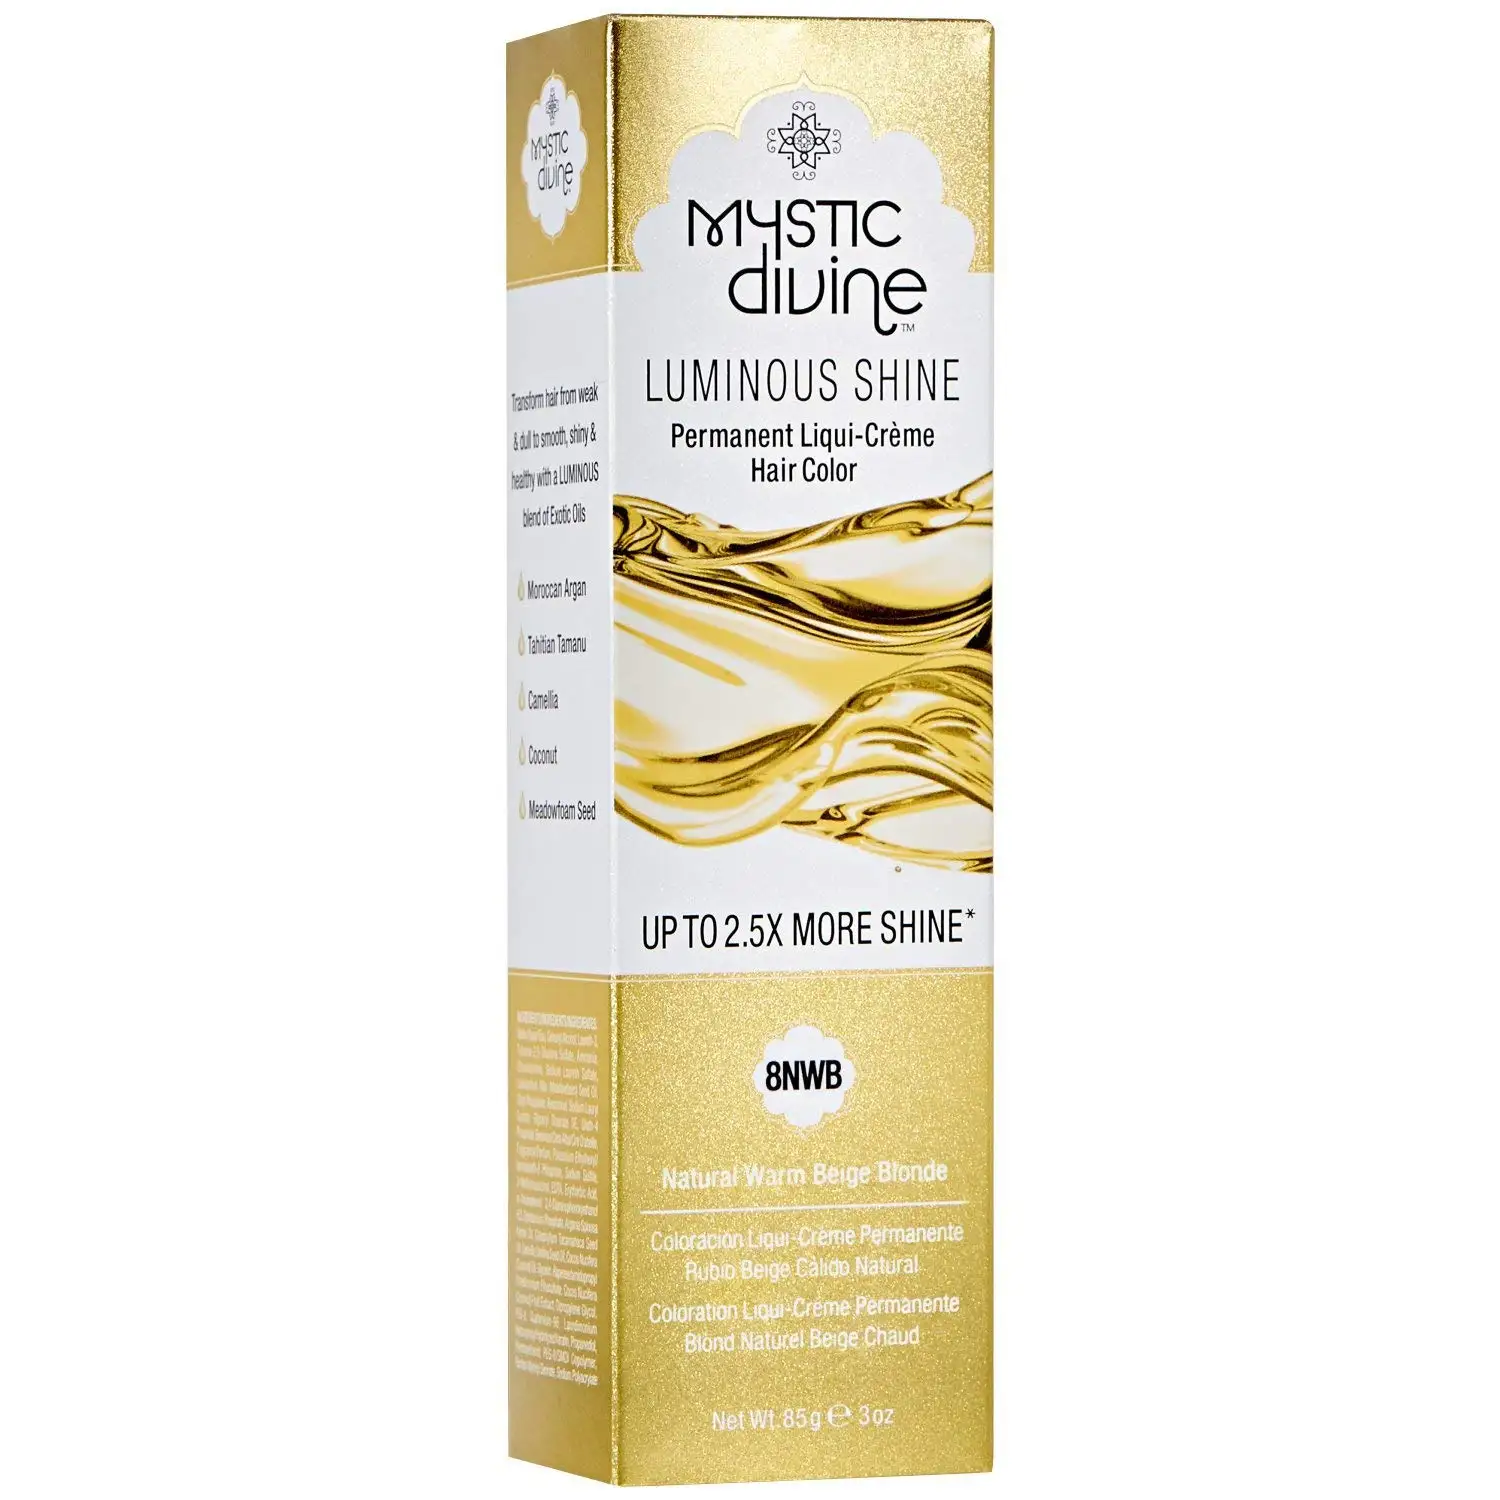 6.49. Mystic Divine 8NWB Natural Warm Beige Blonde Liqui-Creme Permanent Ha...